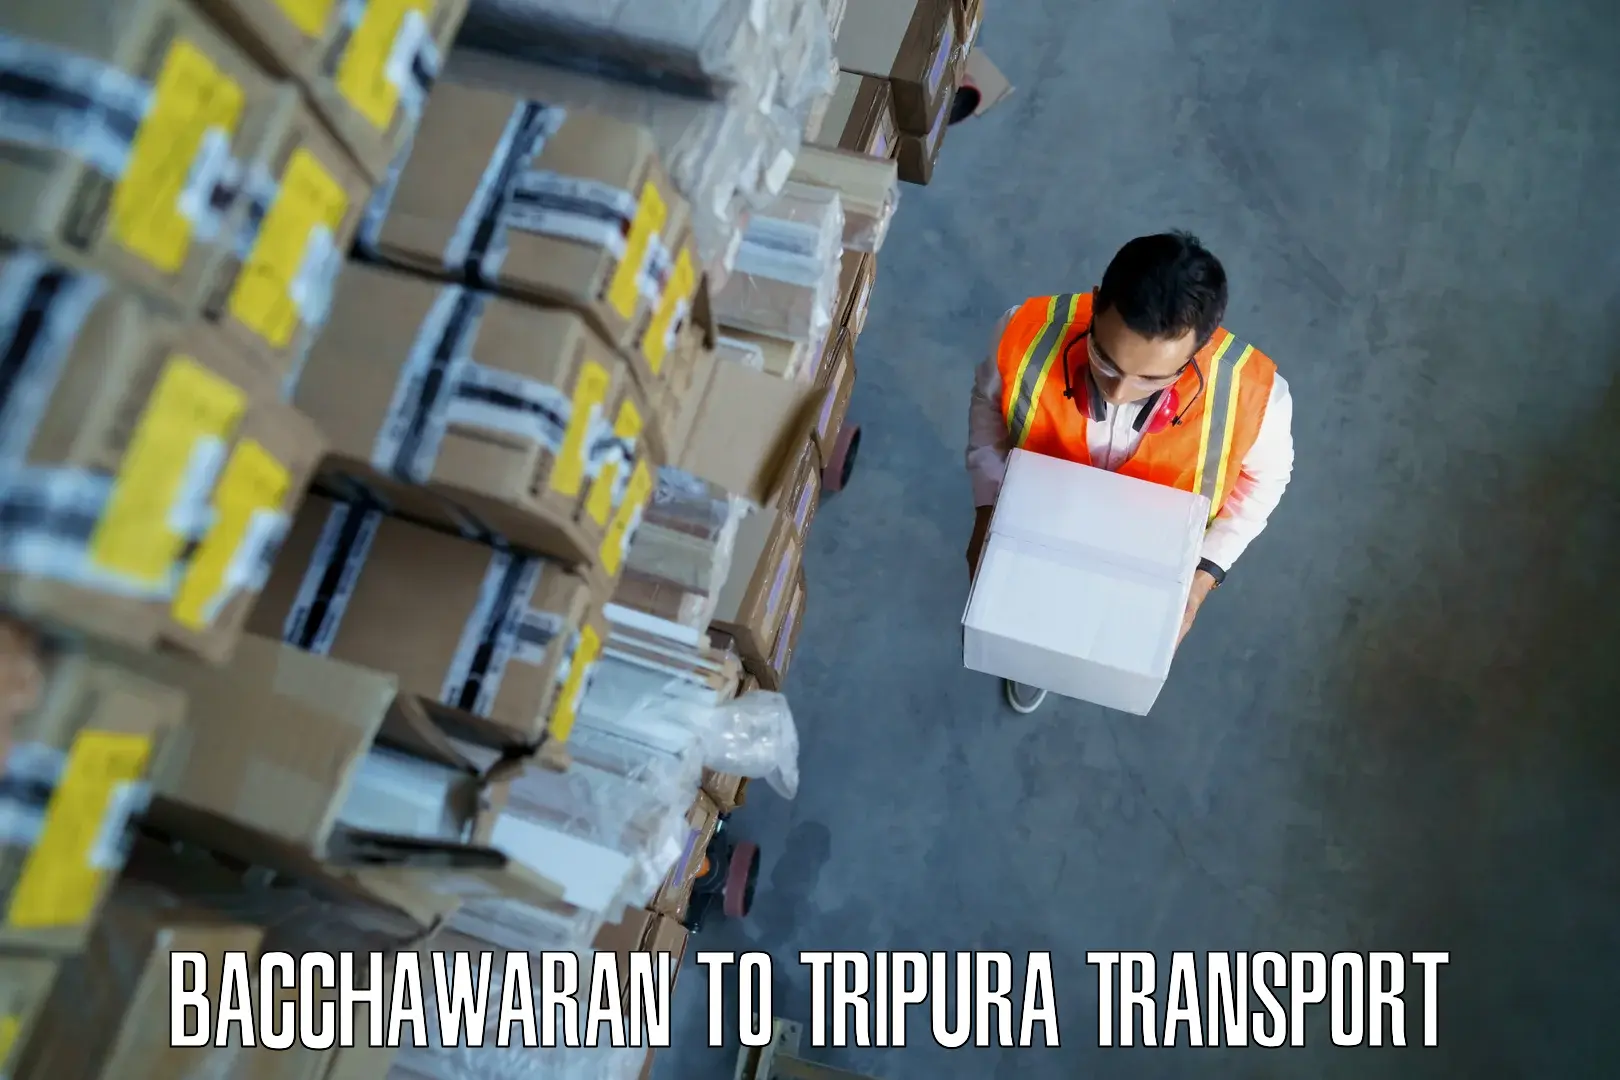 Daily transport service Bacchawaran to West Tripura